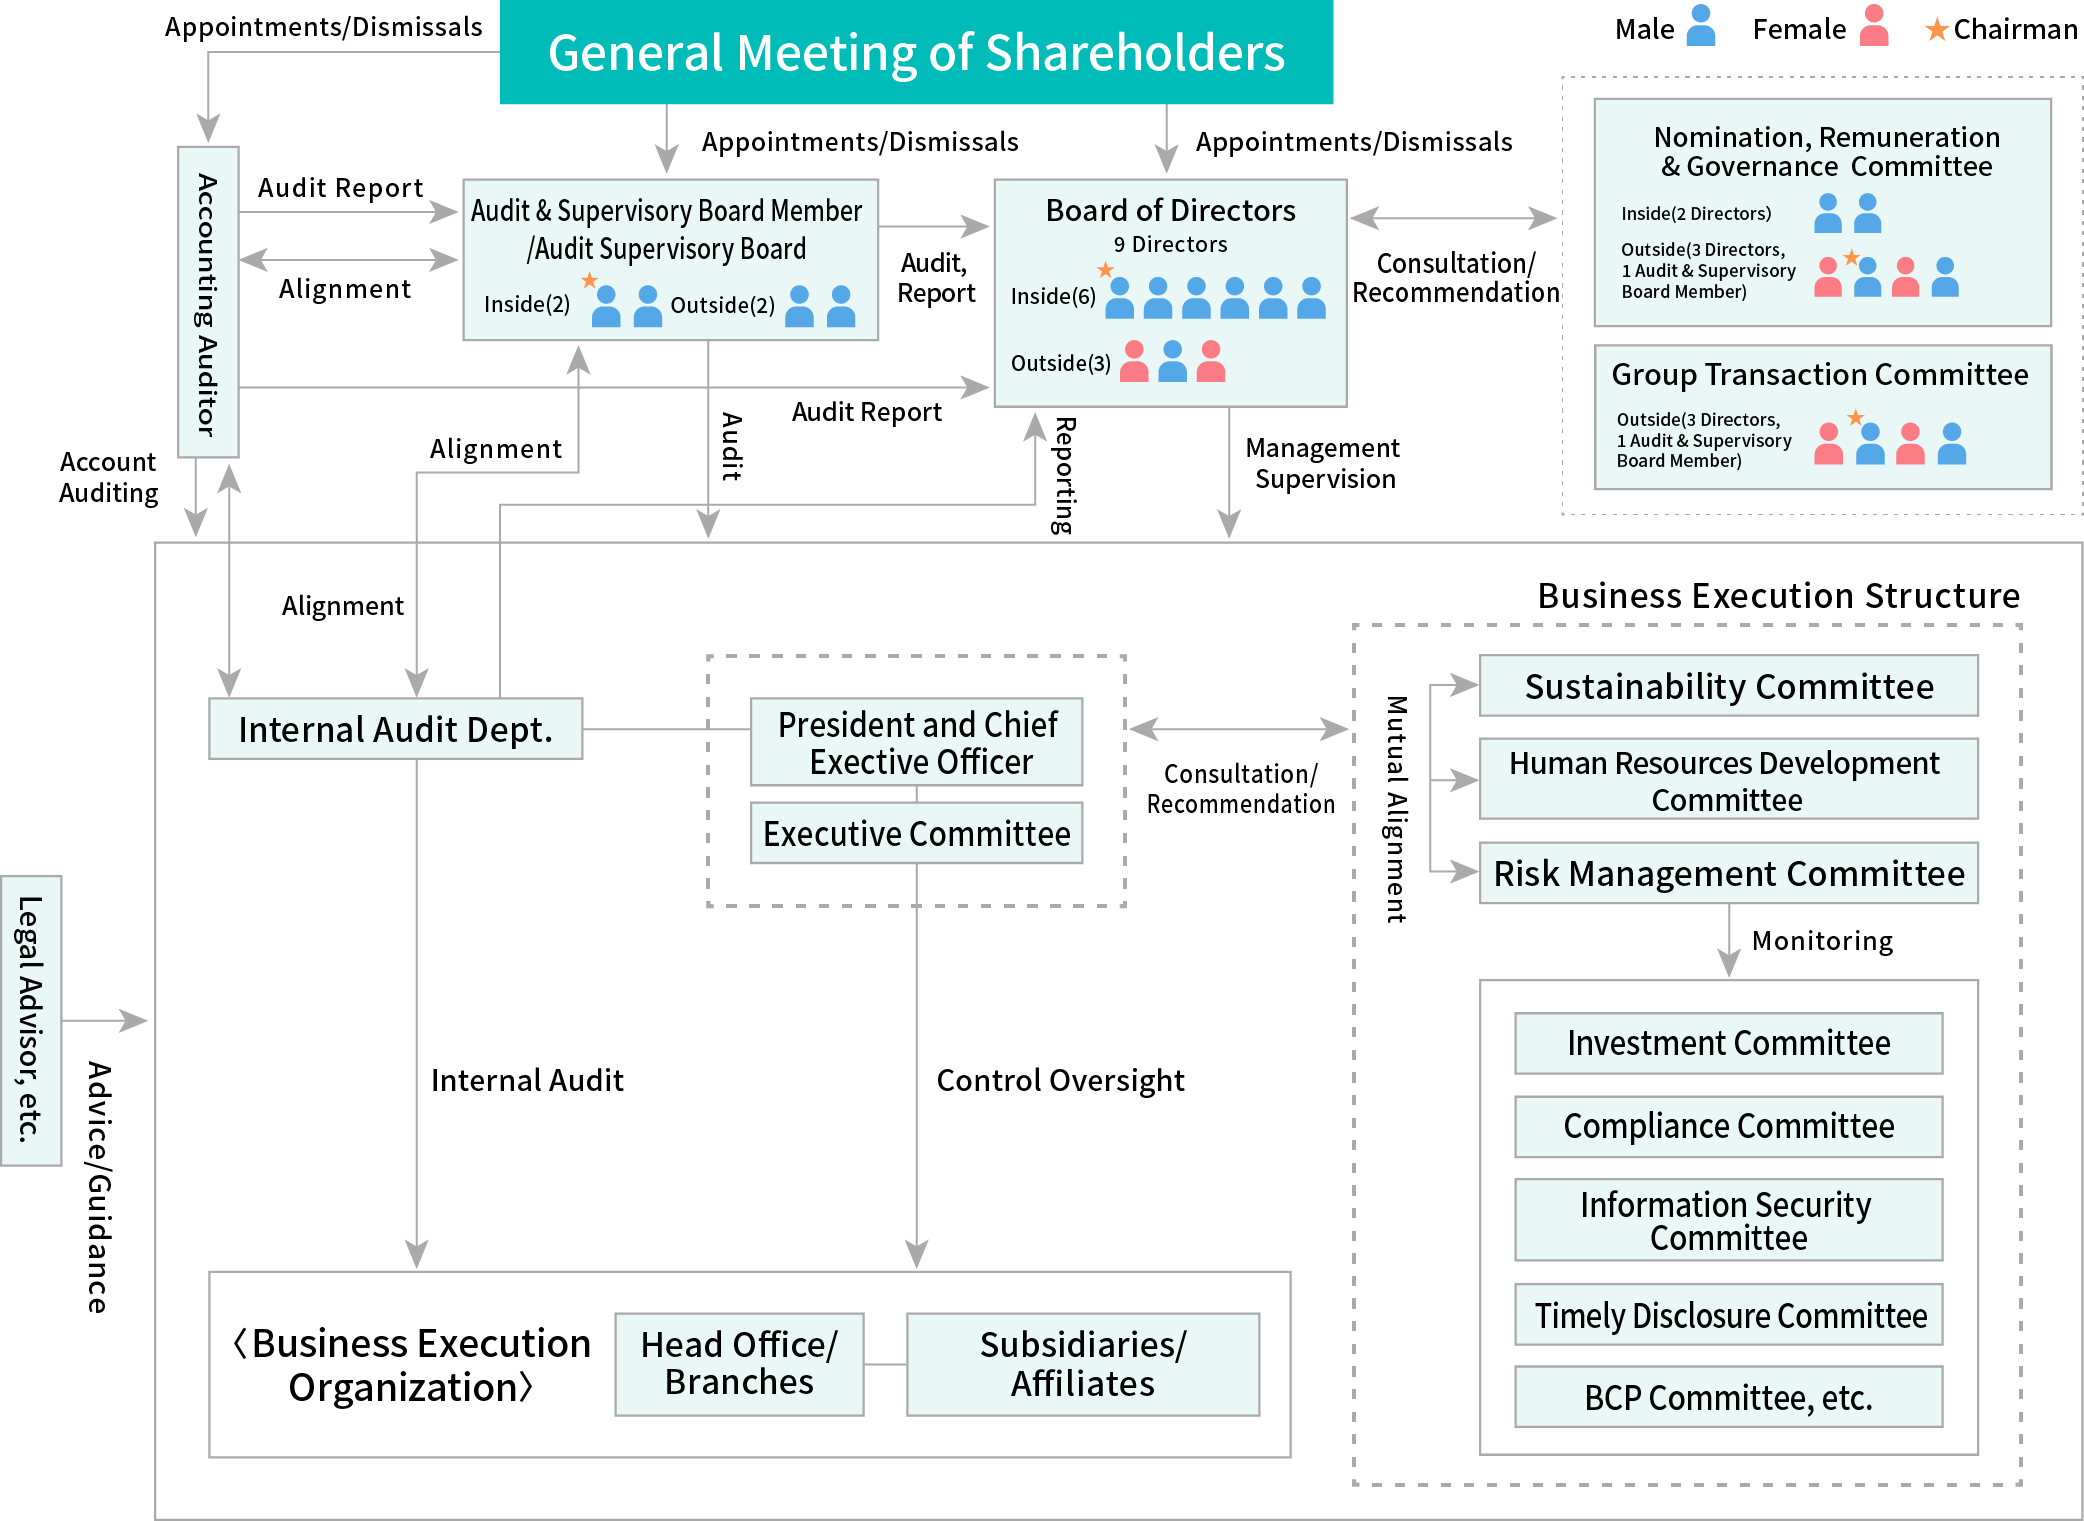 Mitsubishi Shokuhin Corporate Governance Structure